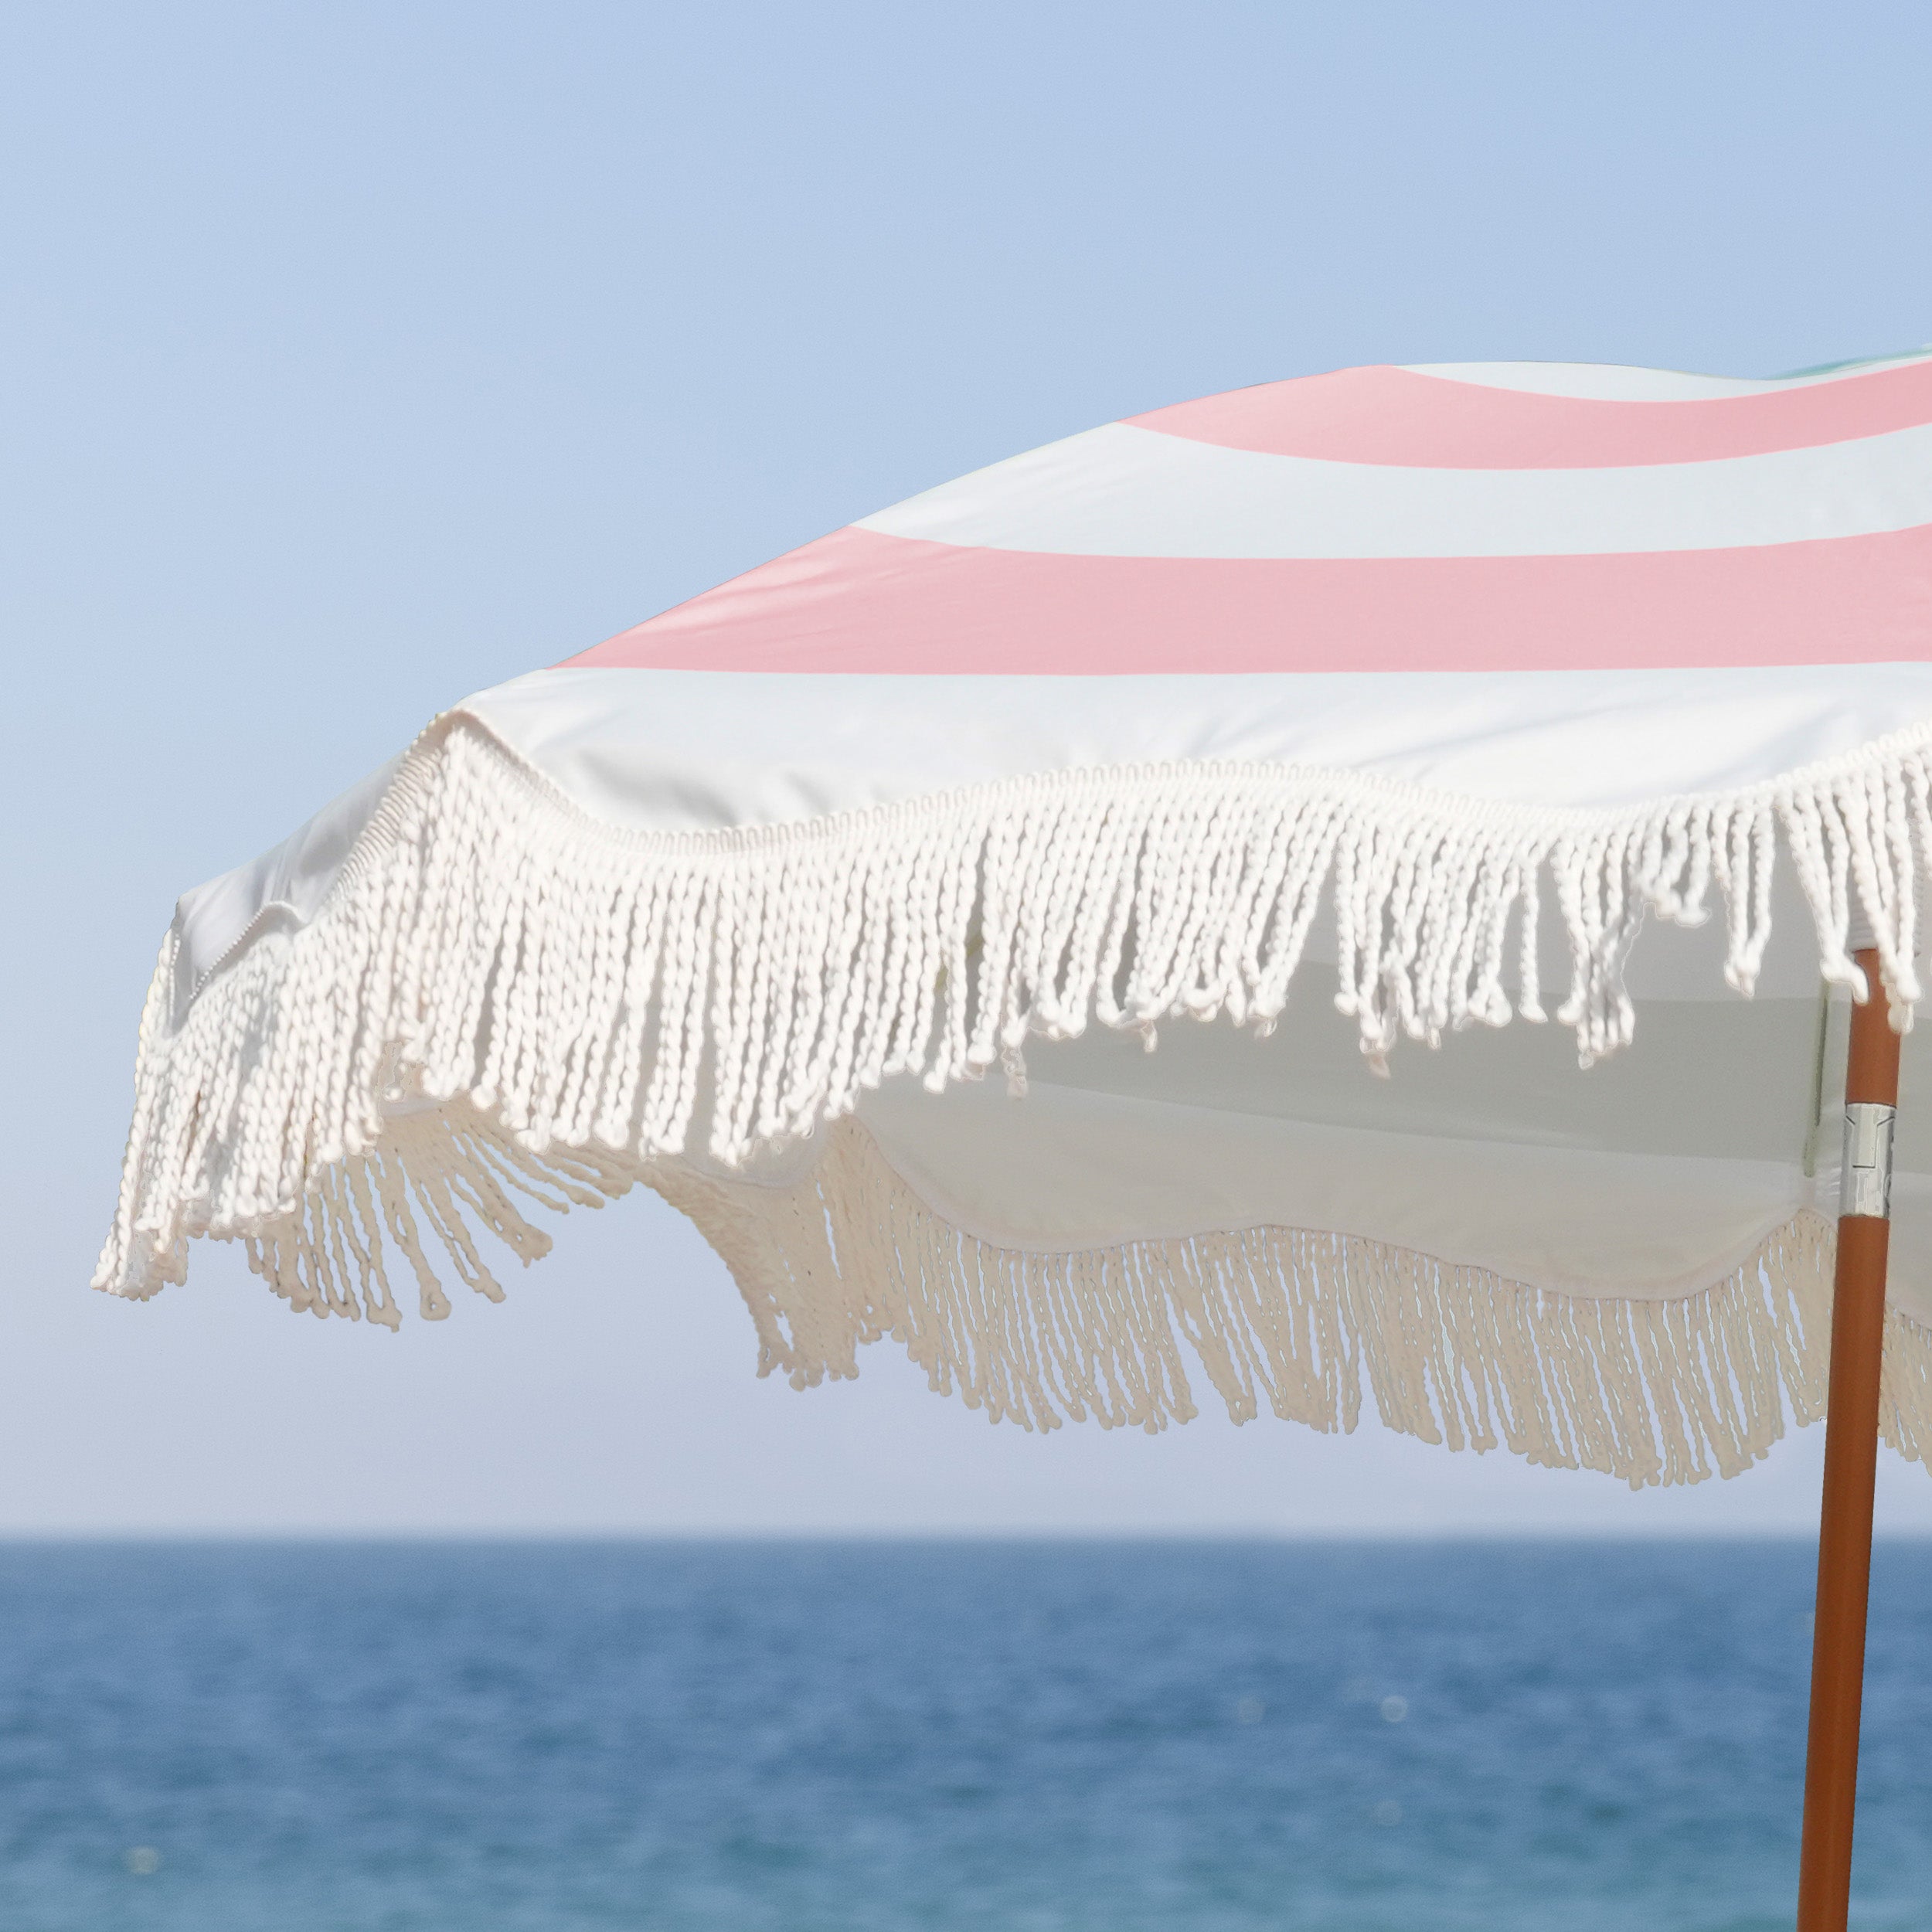 AMMSUN 6.5ft Boho Fringe Beach Umbrella Rose Pink Stripe